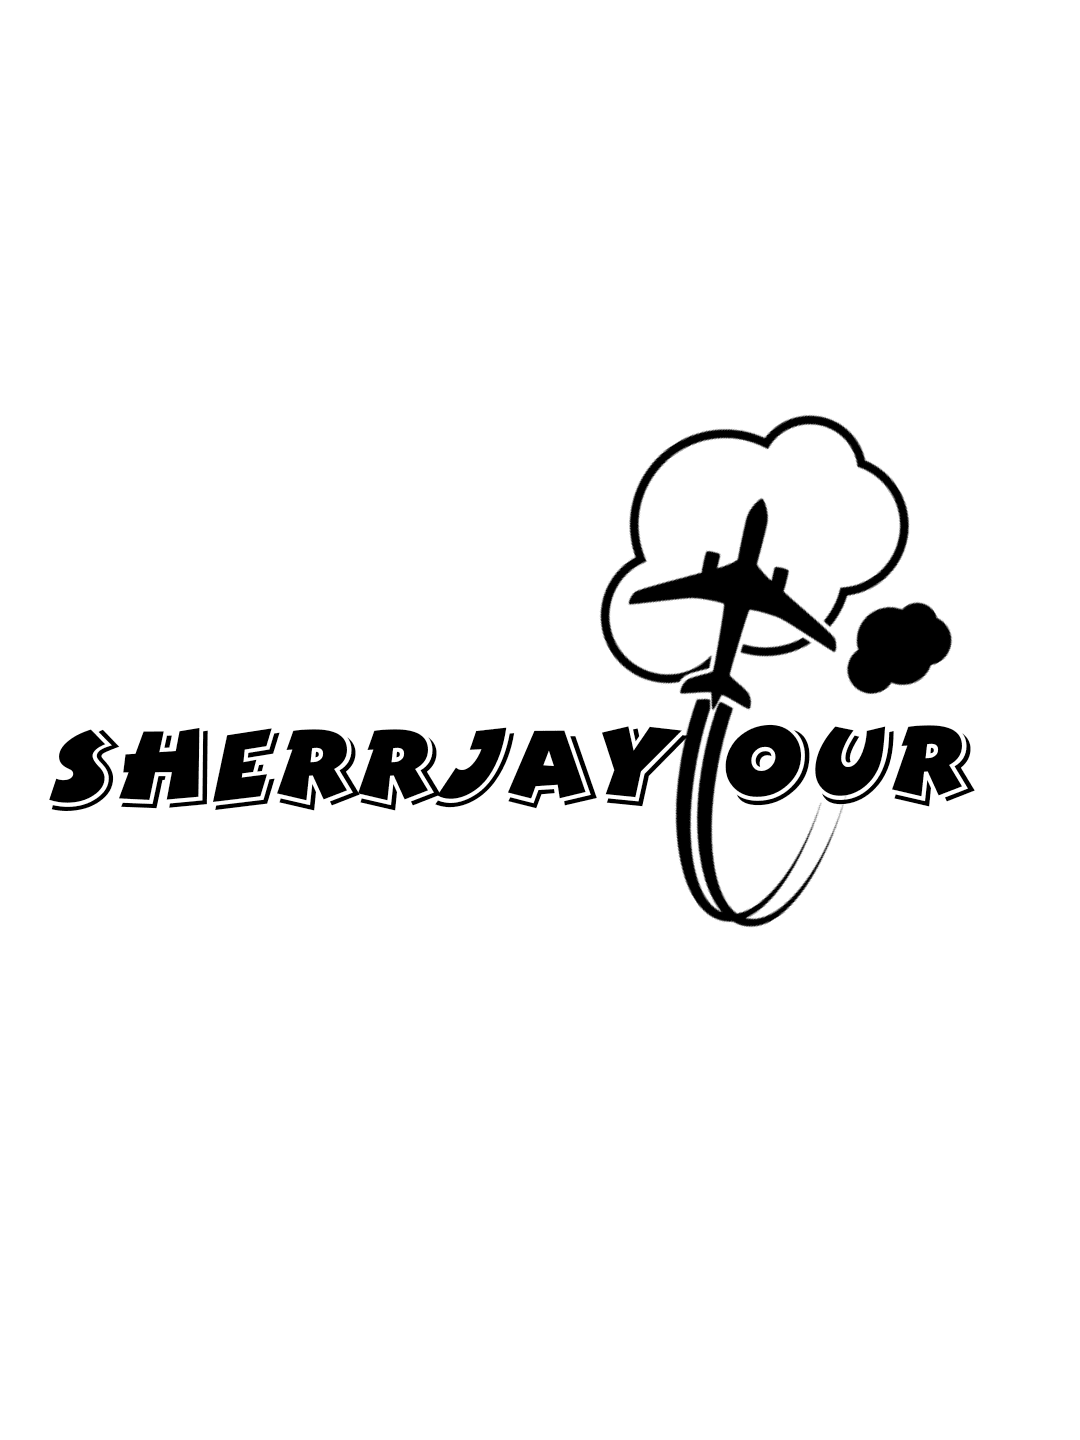 Sherrjay Tour